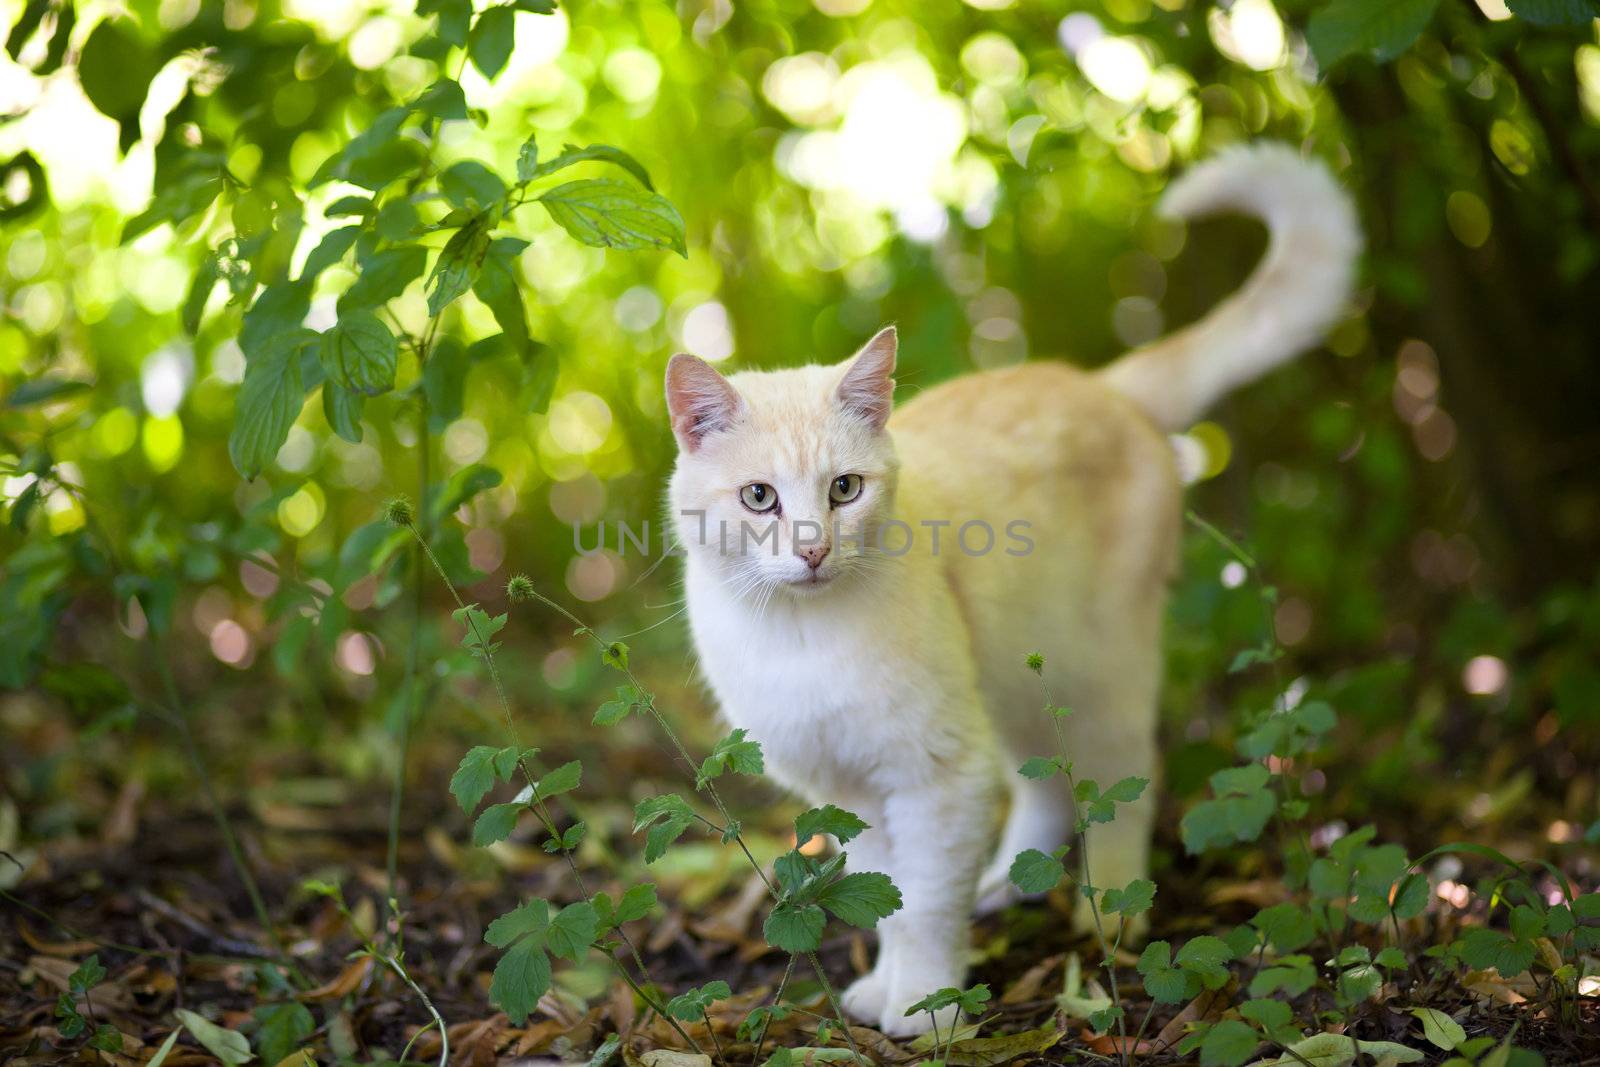 Photo of a race cat